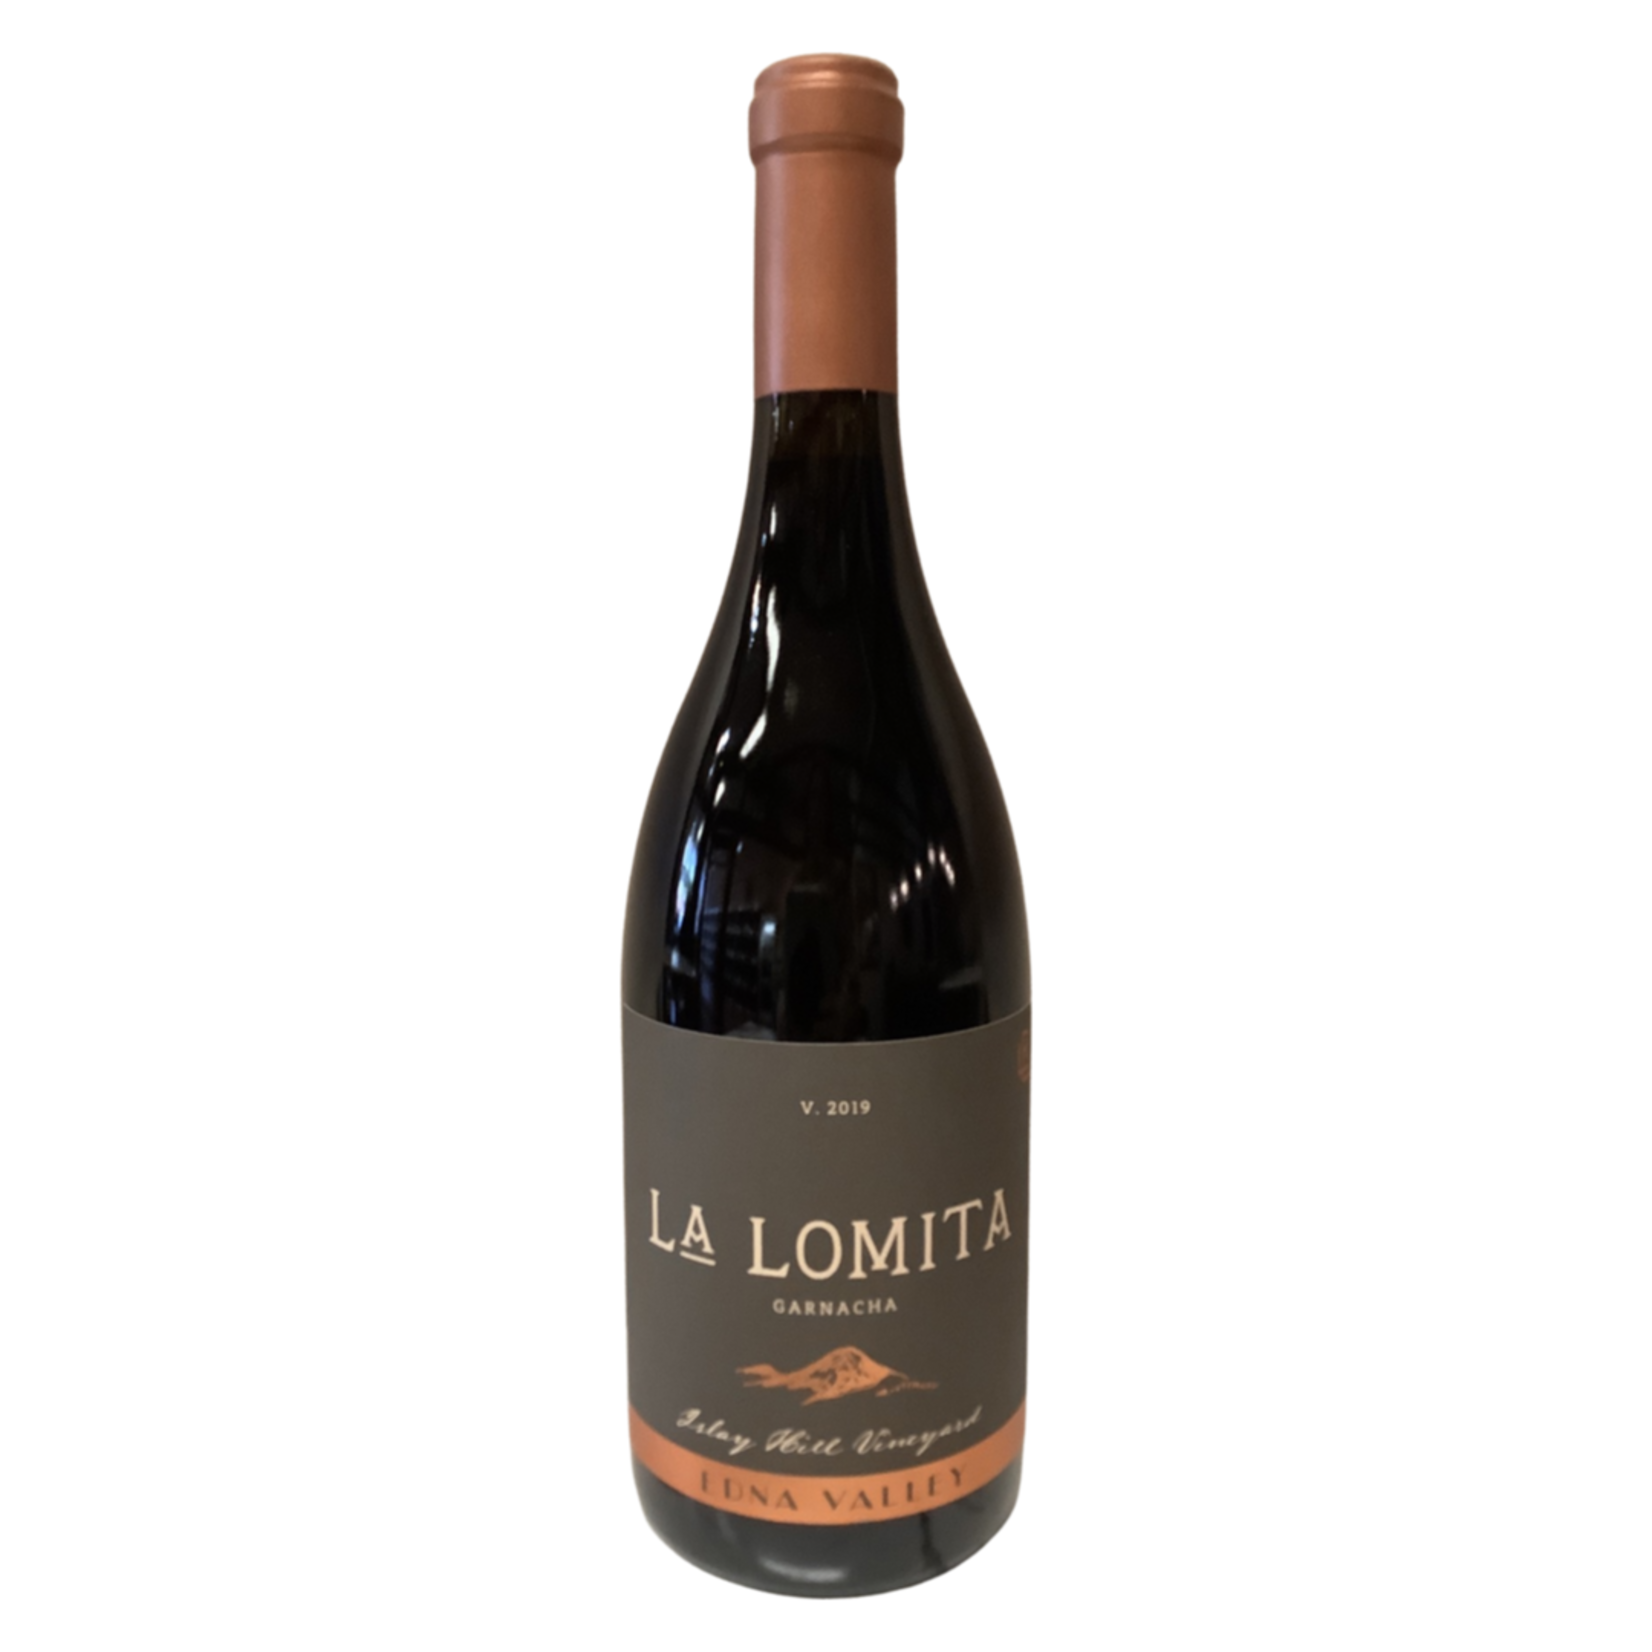 2019 La Lomita "Islay Hill Vineyard" Garnacha, Edna Valley CA